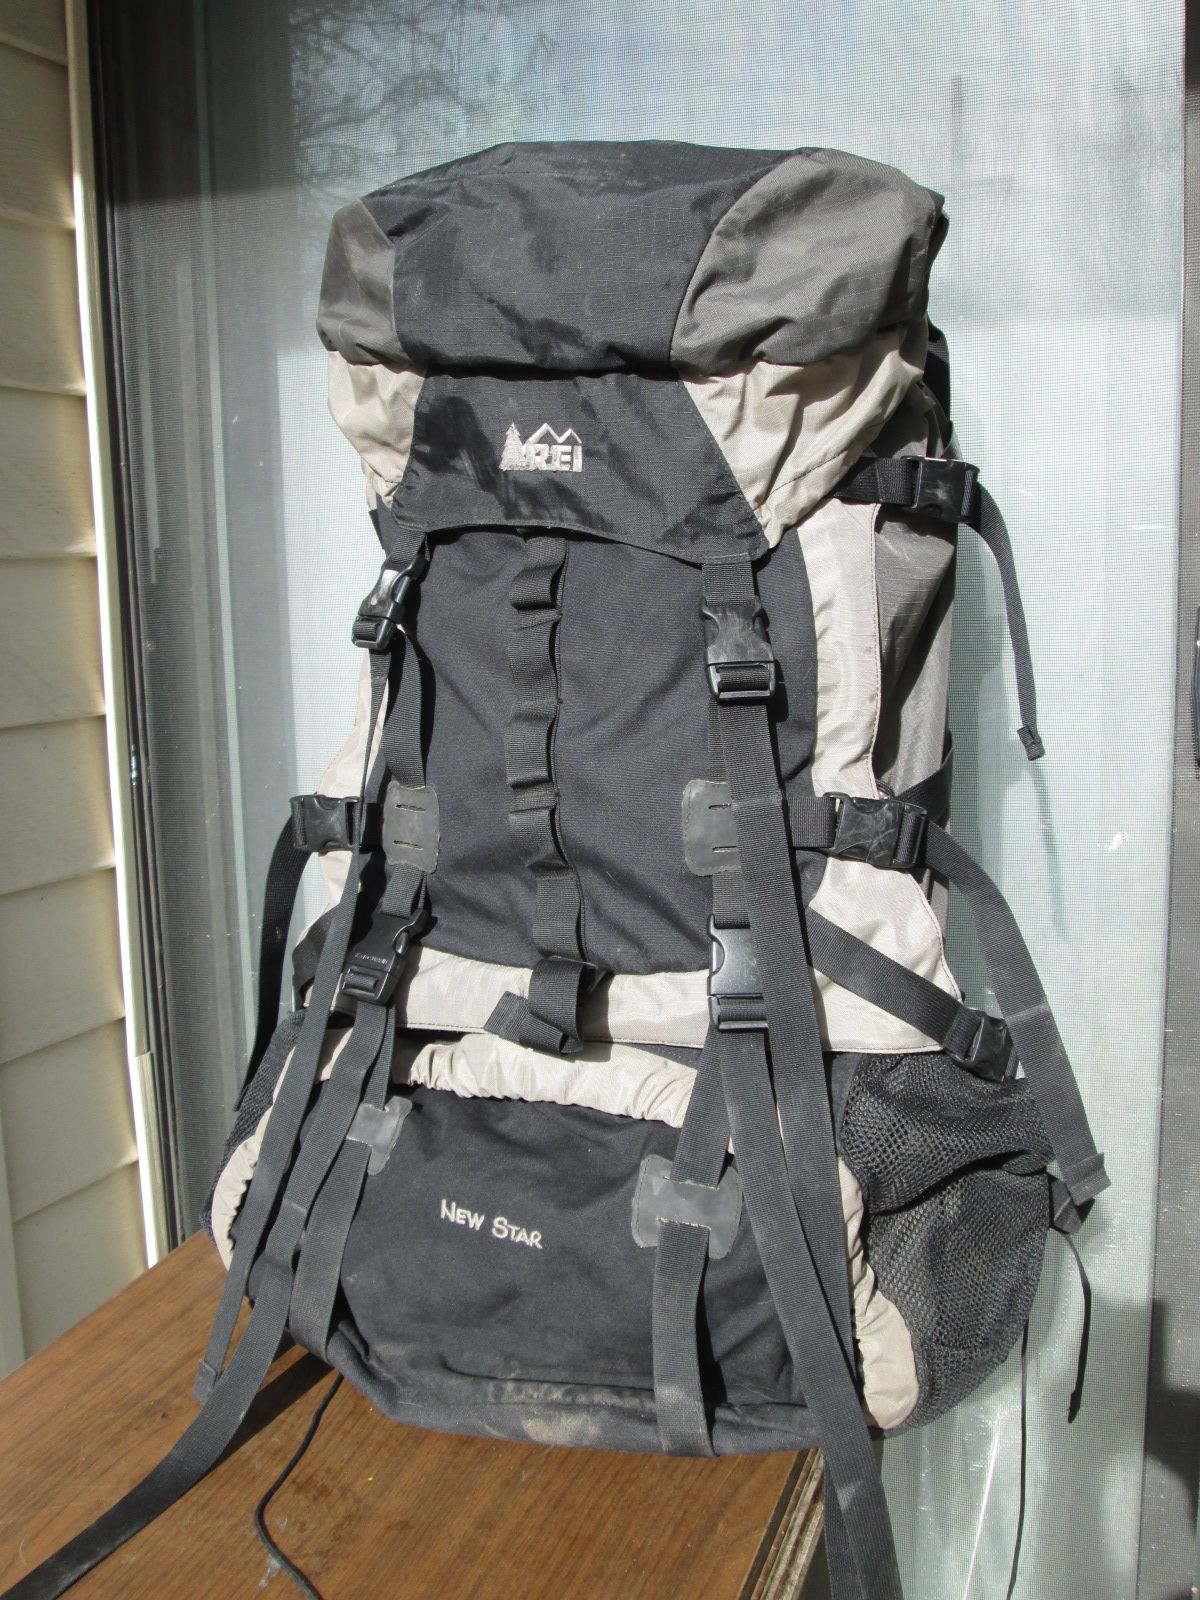 REI Backpack NewStar Men's Large Internal Frame Hiking Gear